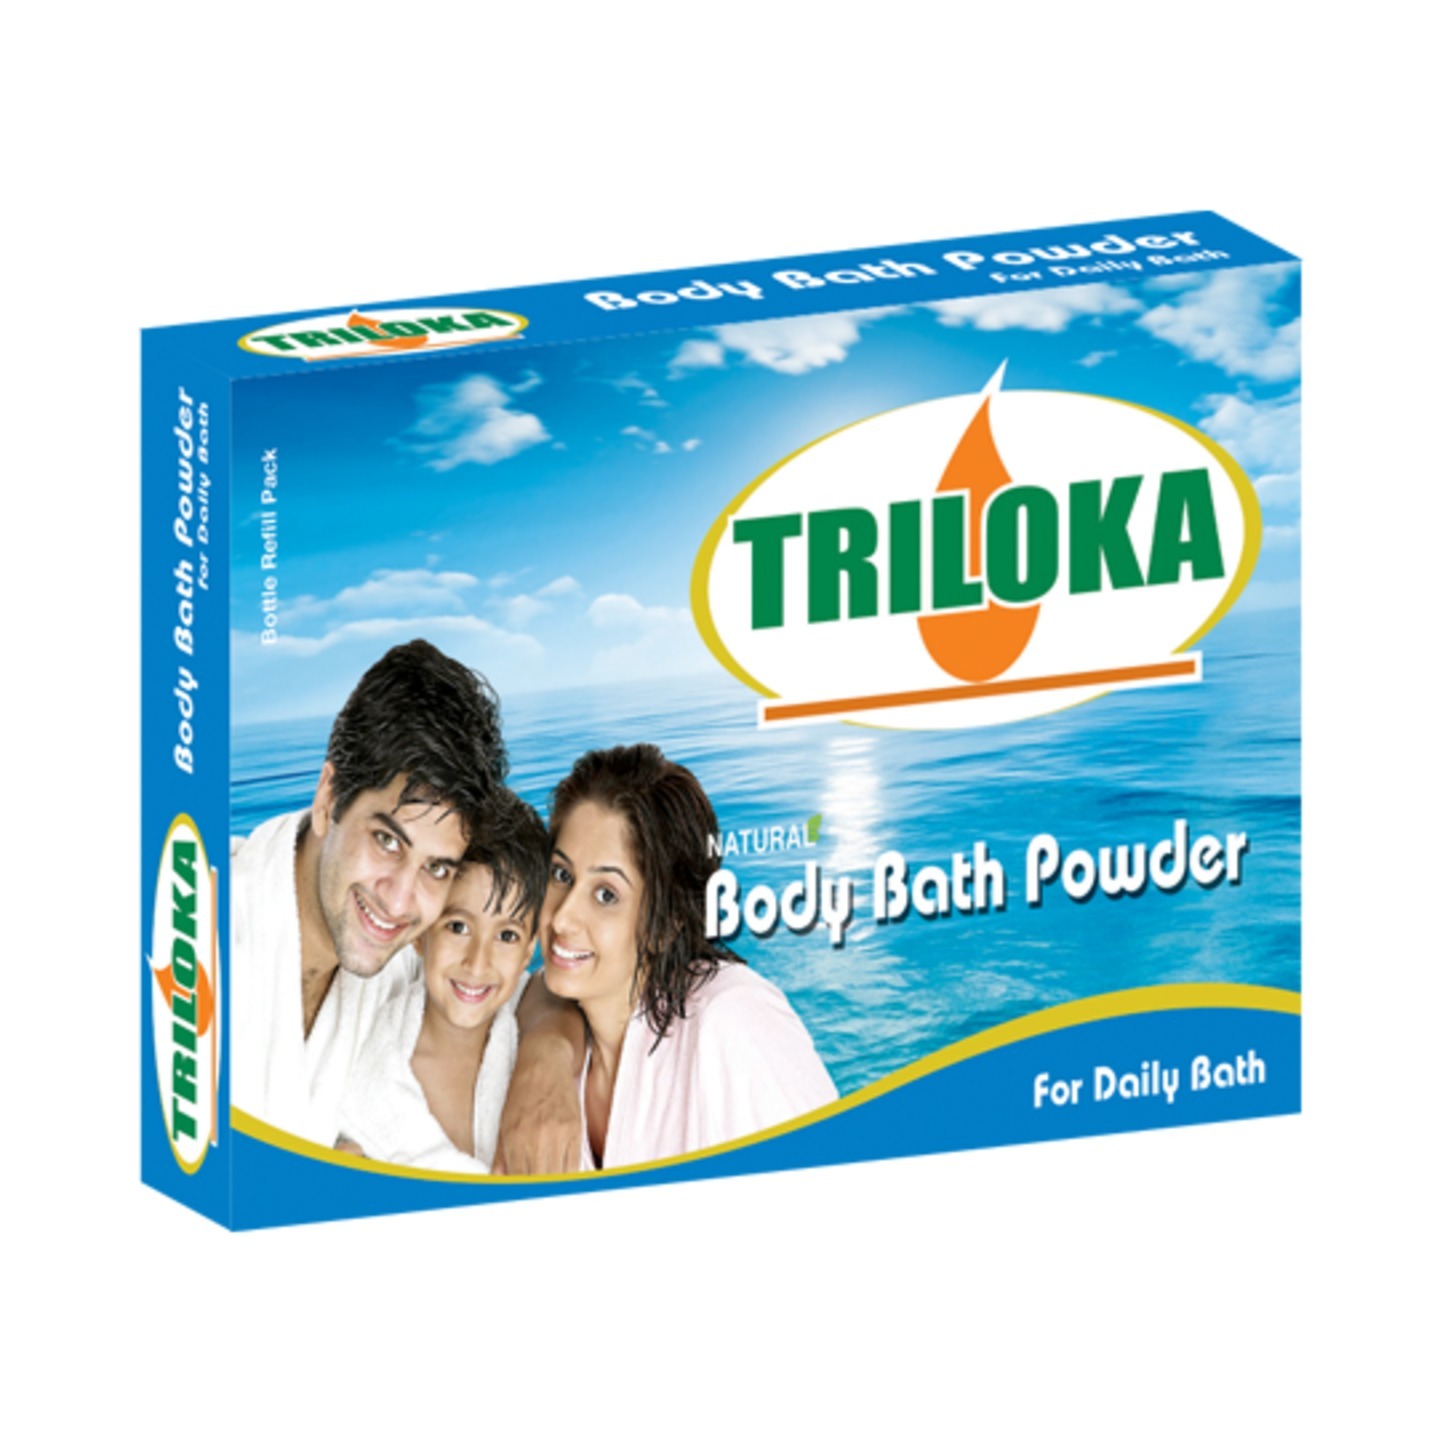 New Triloka Body Bathing Powder Re- Fill Box Pack